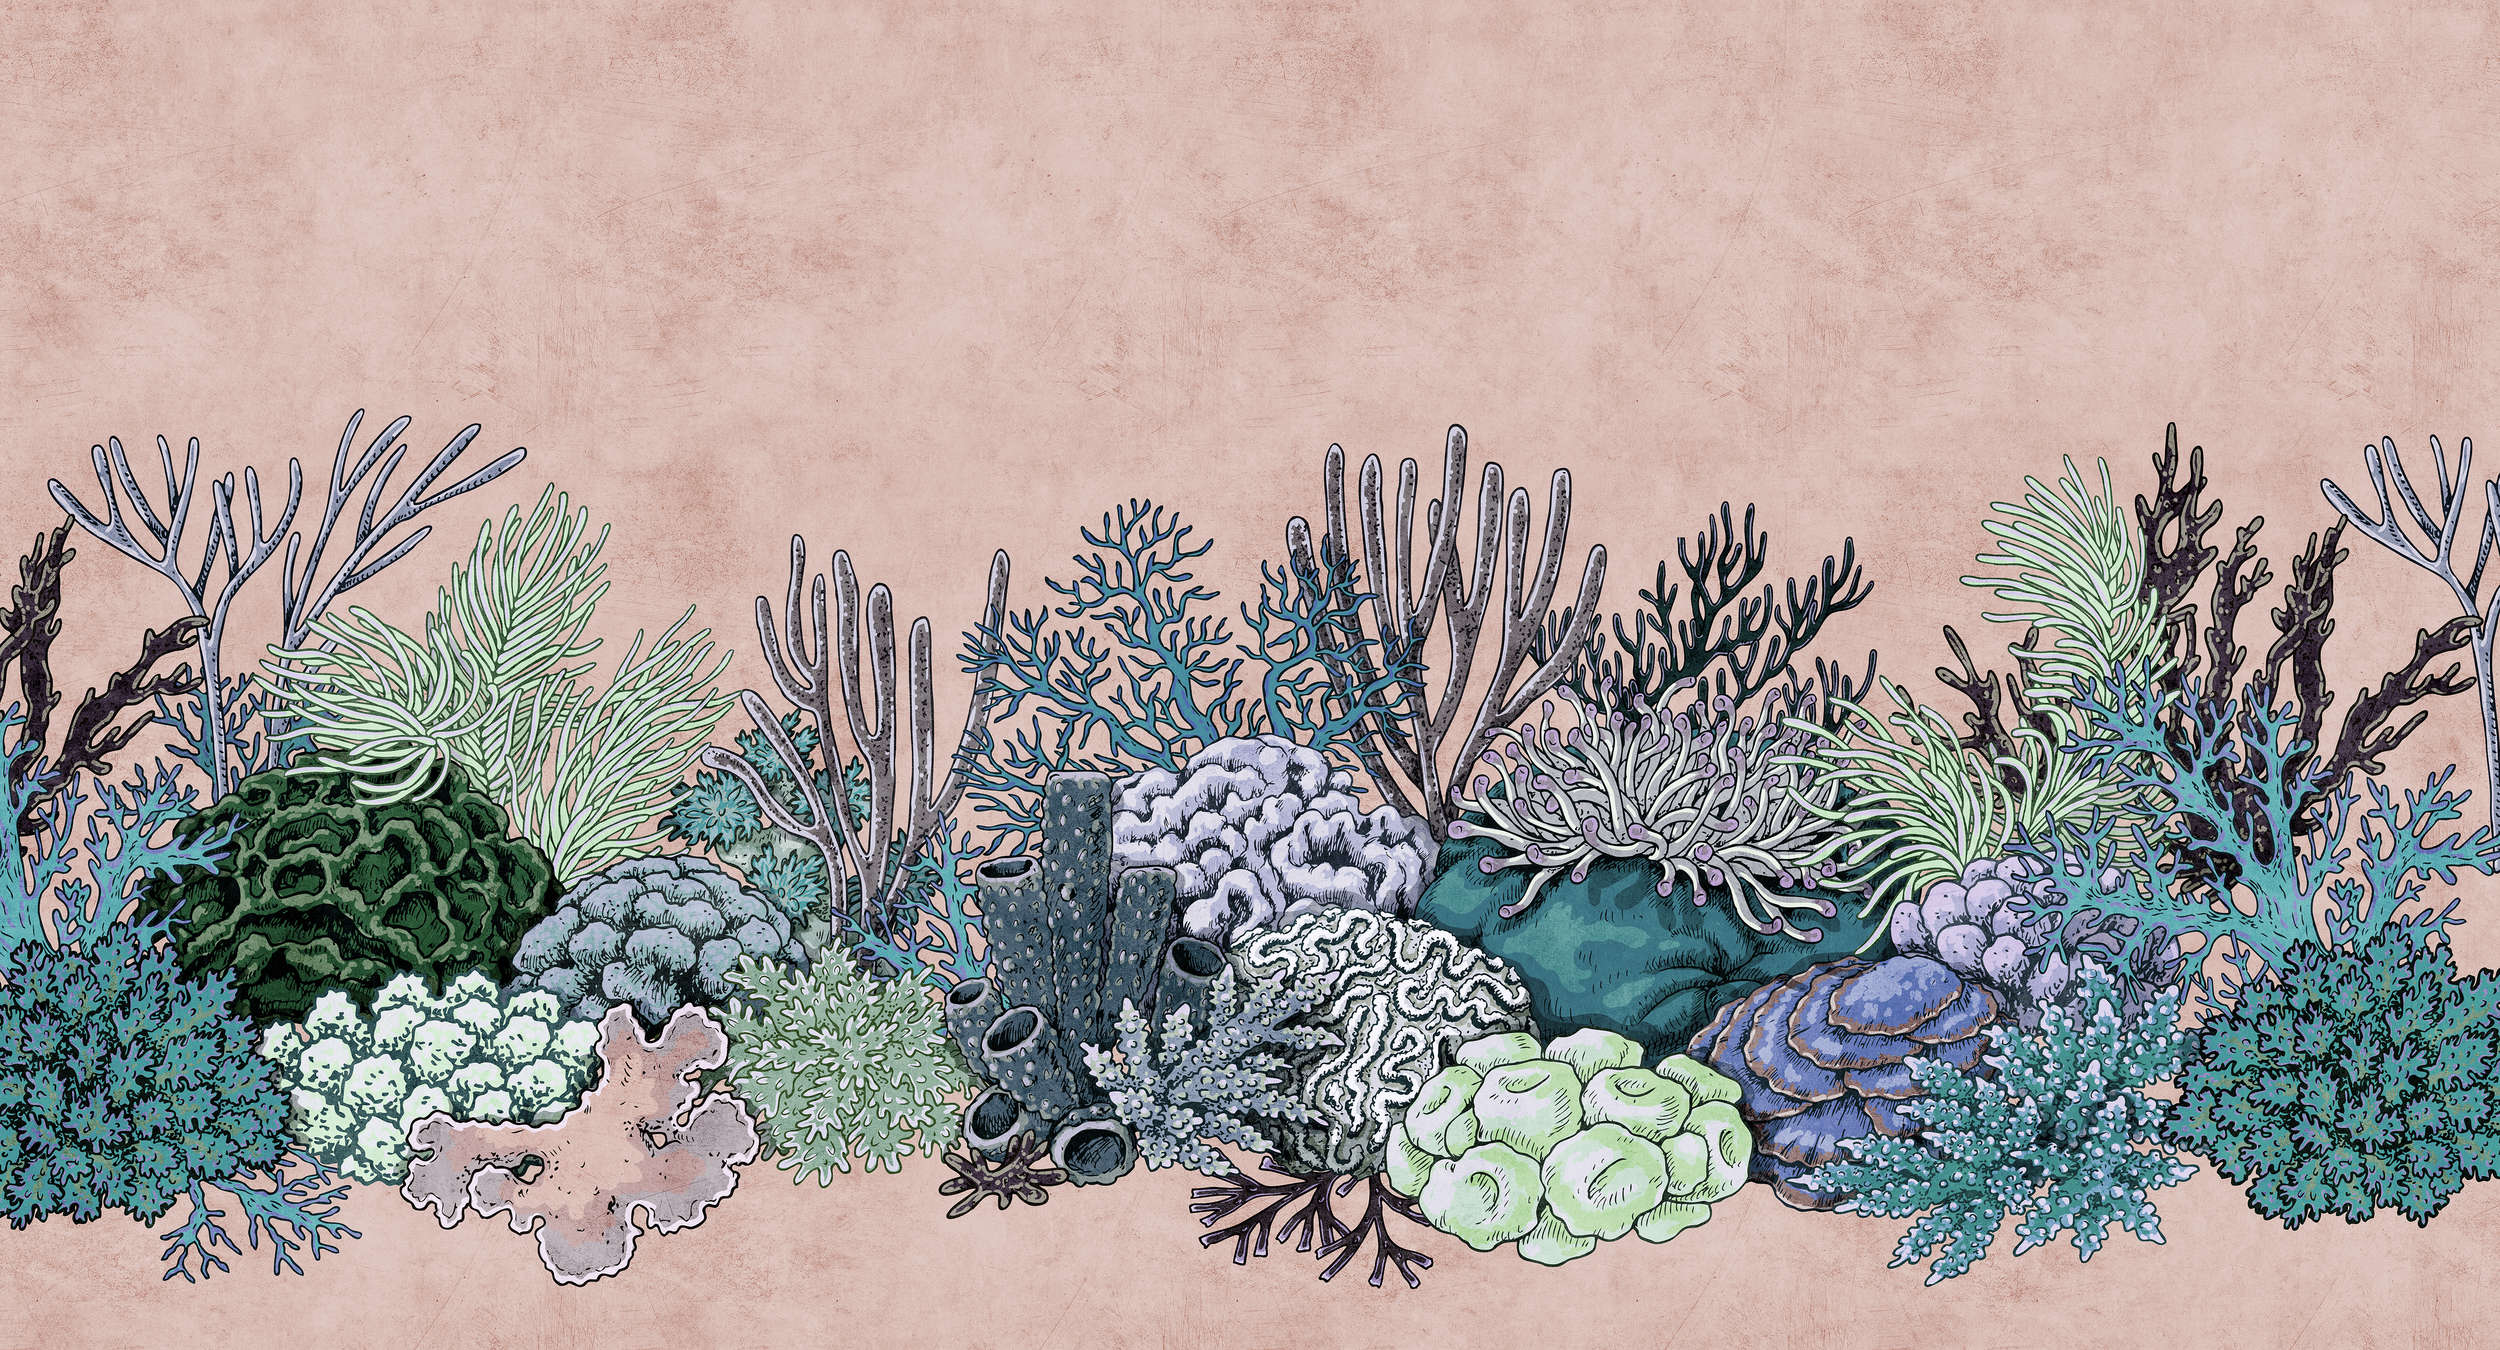             Octopus's Garden 2 - Carta da parati corallina con struttura in carta assorbente in stile disegno - Verde, Rosa | Vello liscio opaco
        